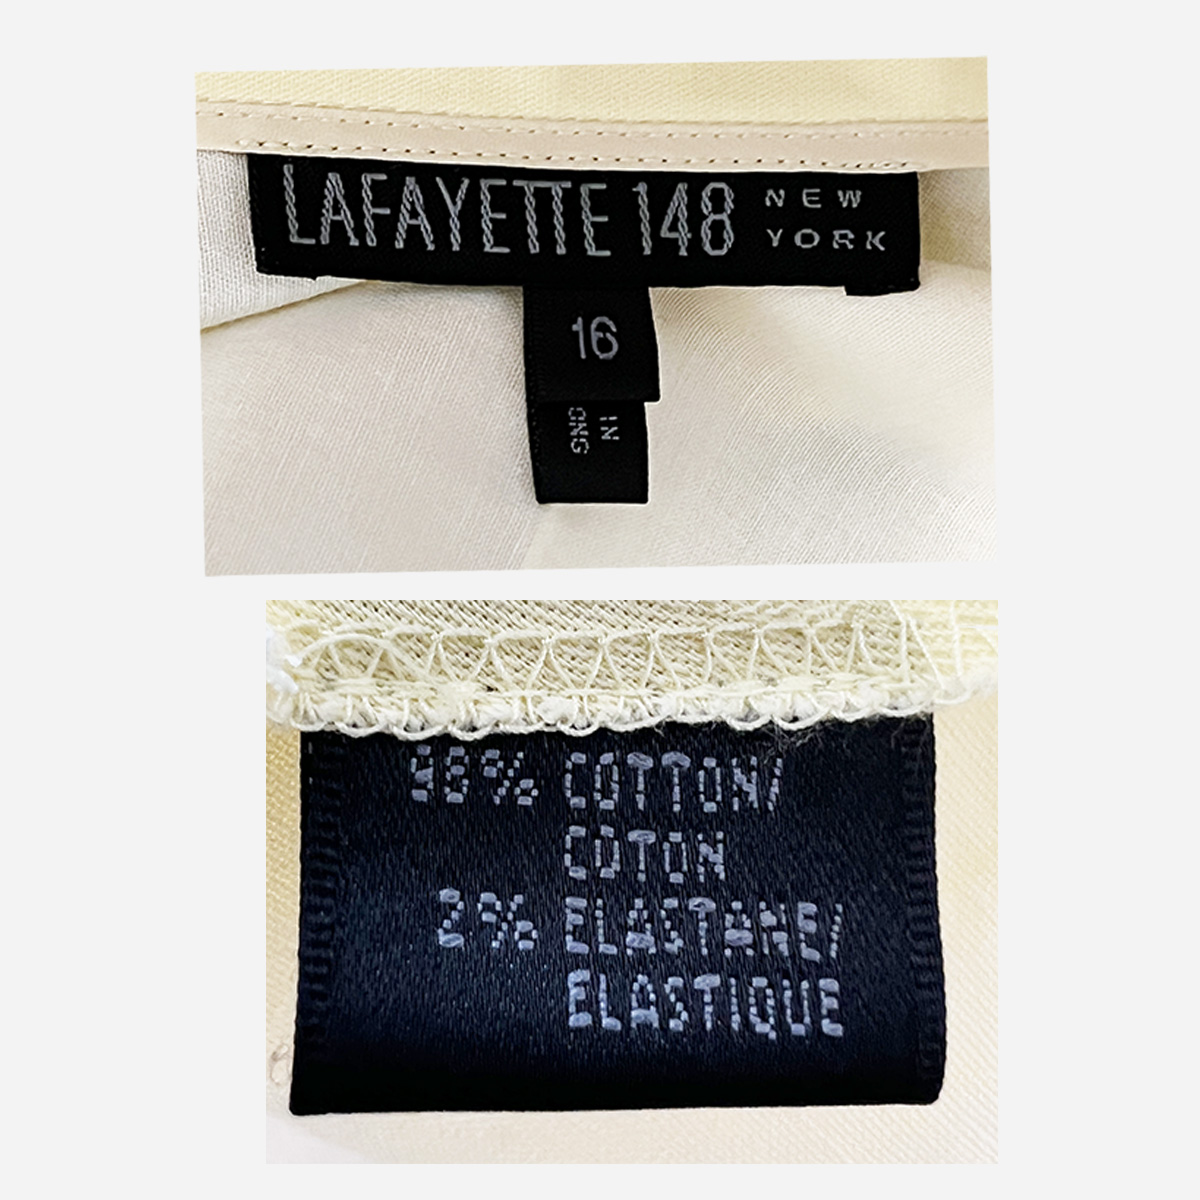 Lafayette 148 New York label